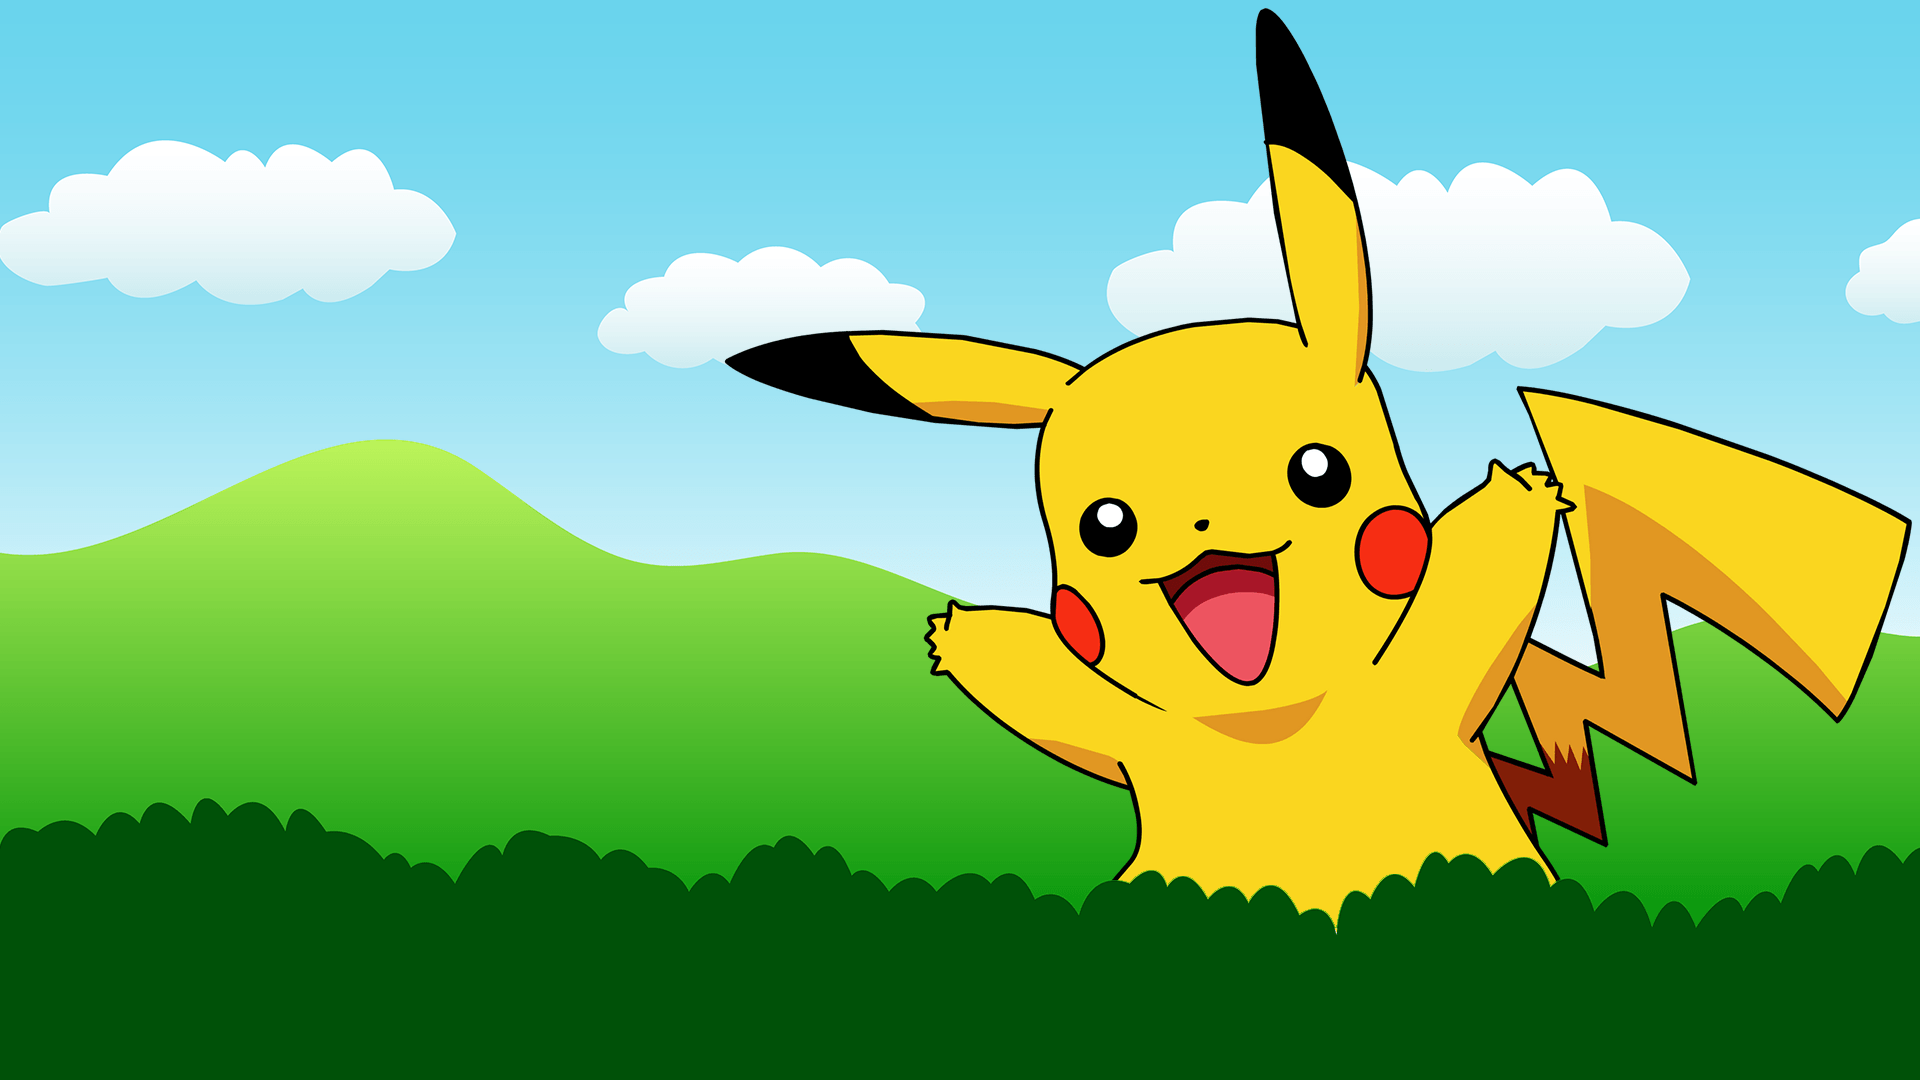 Pokemon Pikachu Wallpapers - Top Free Pokemon Pikachu Backgrounds